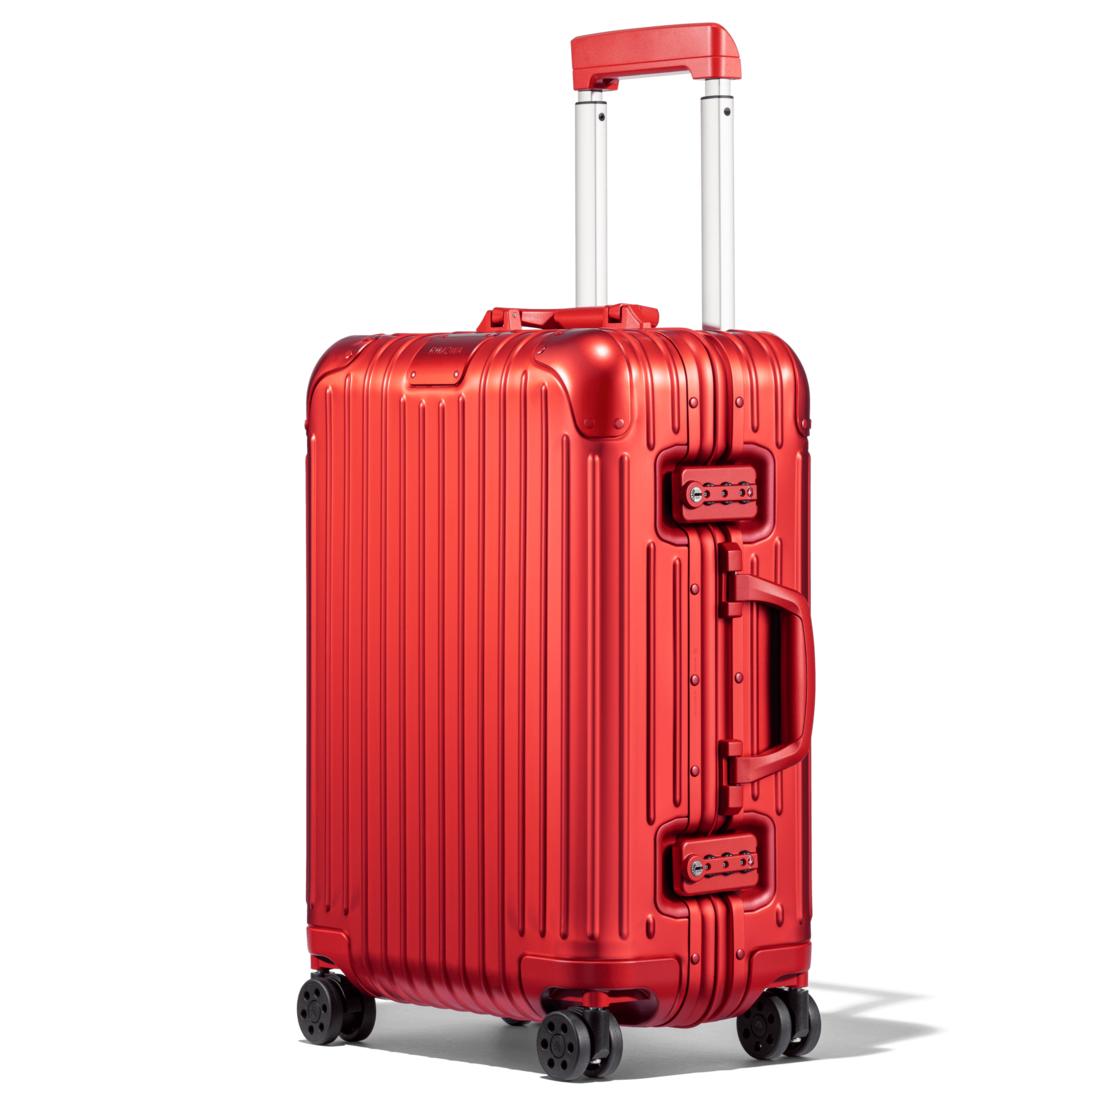 RIMOWA Original Cabin Suitcase in Scarlet (Red) - Lyst